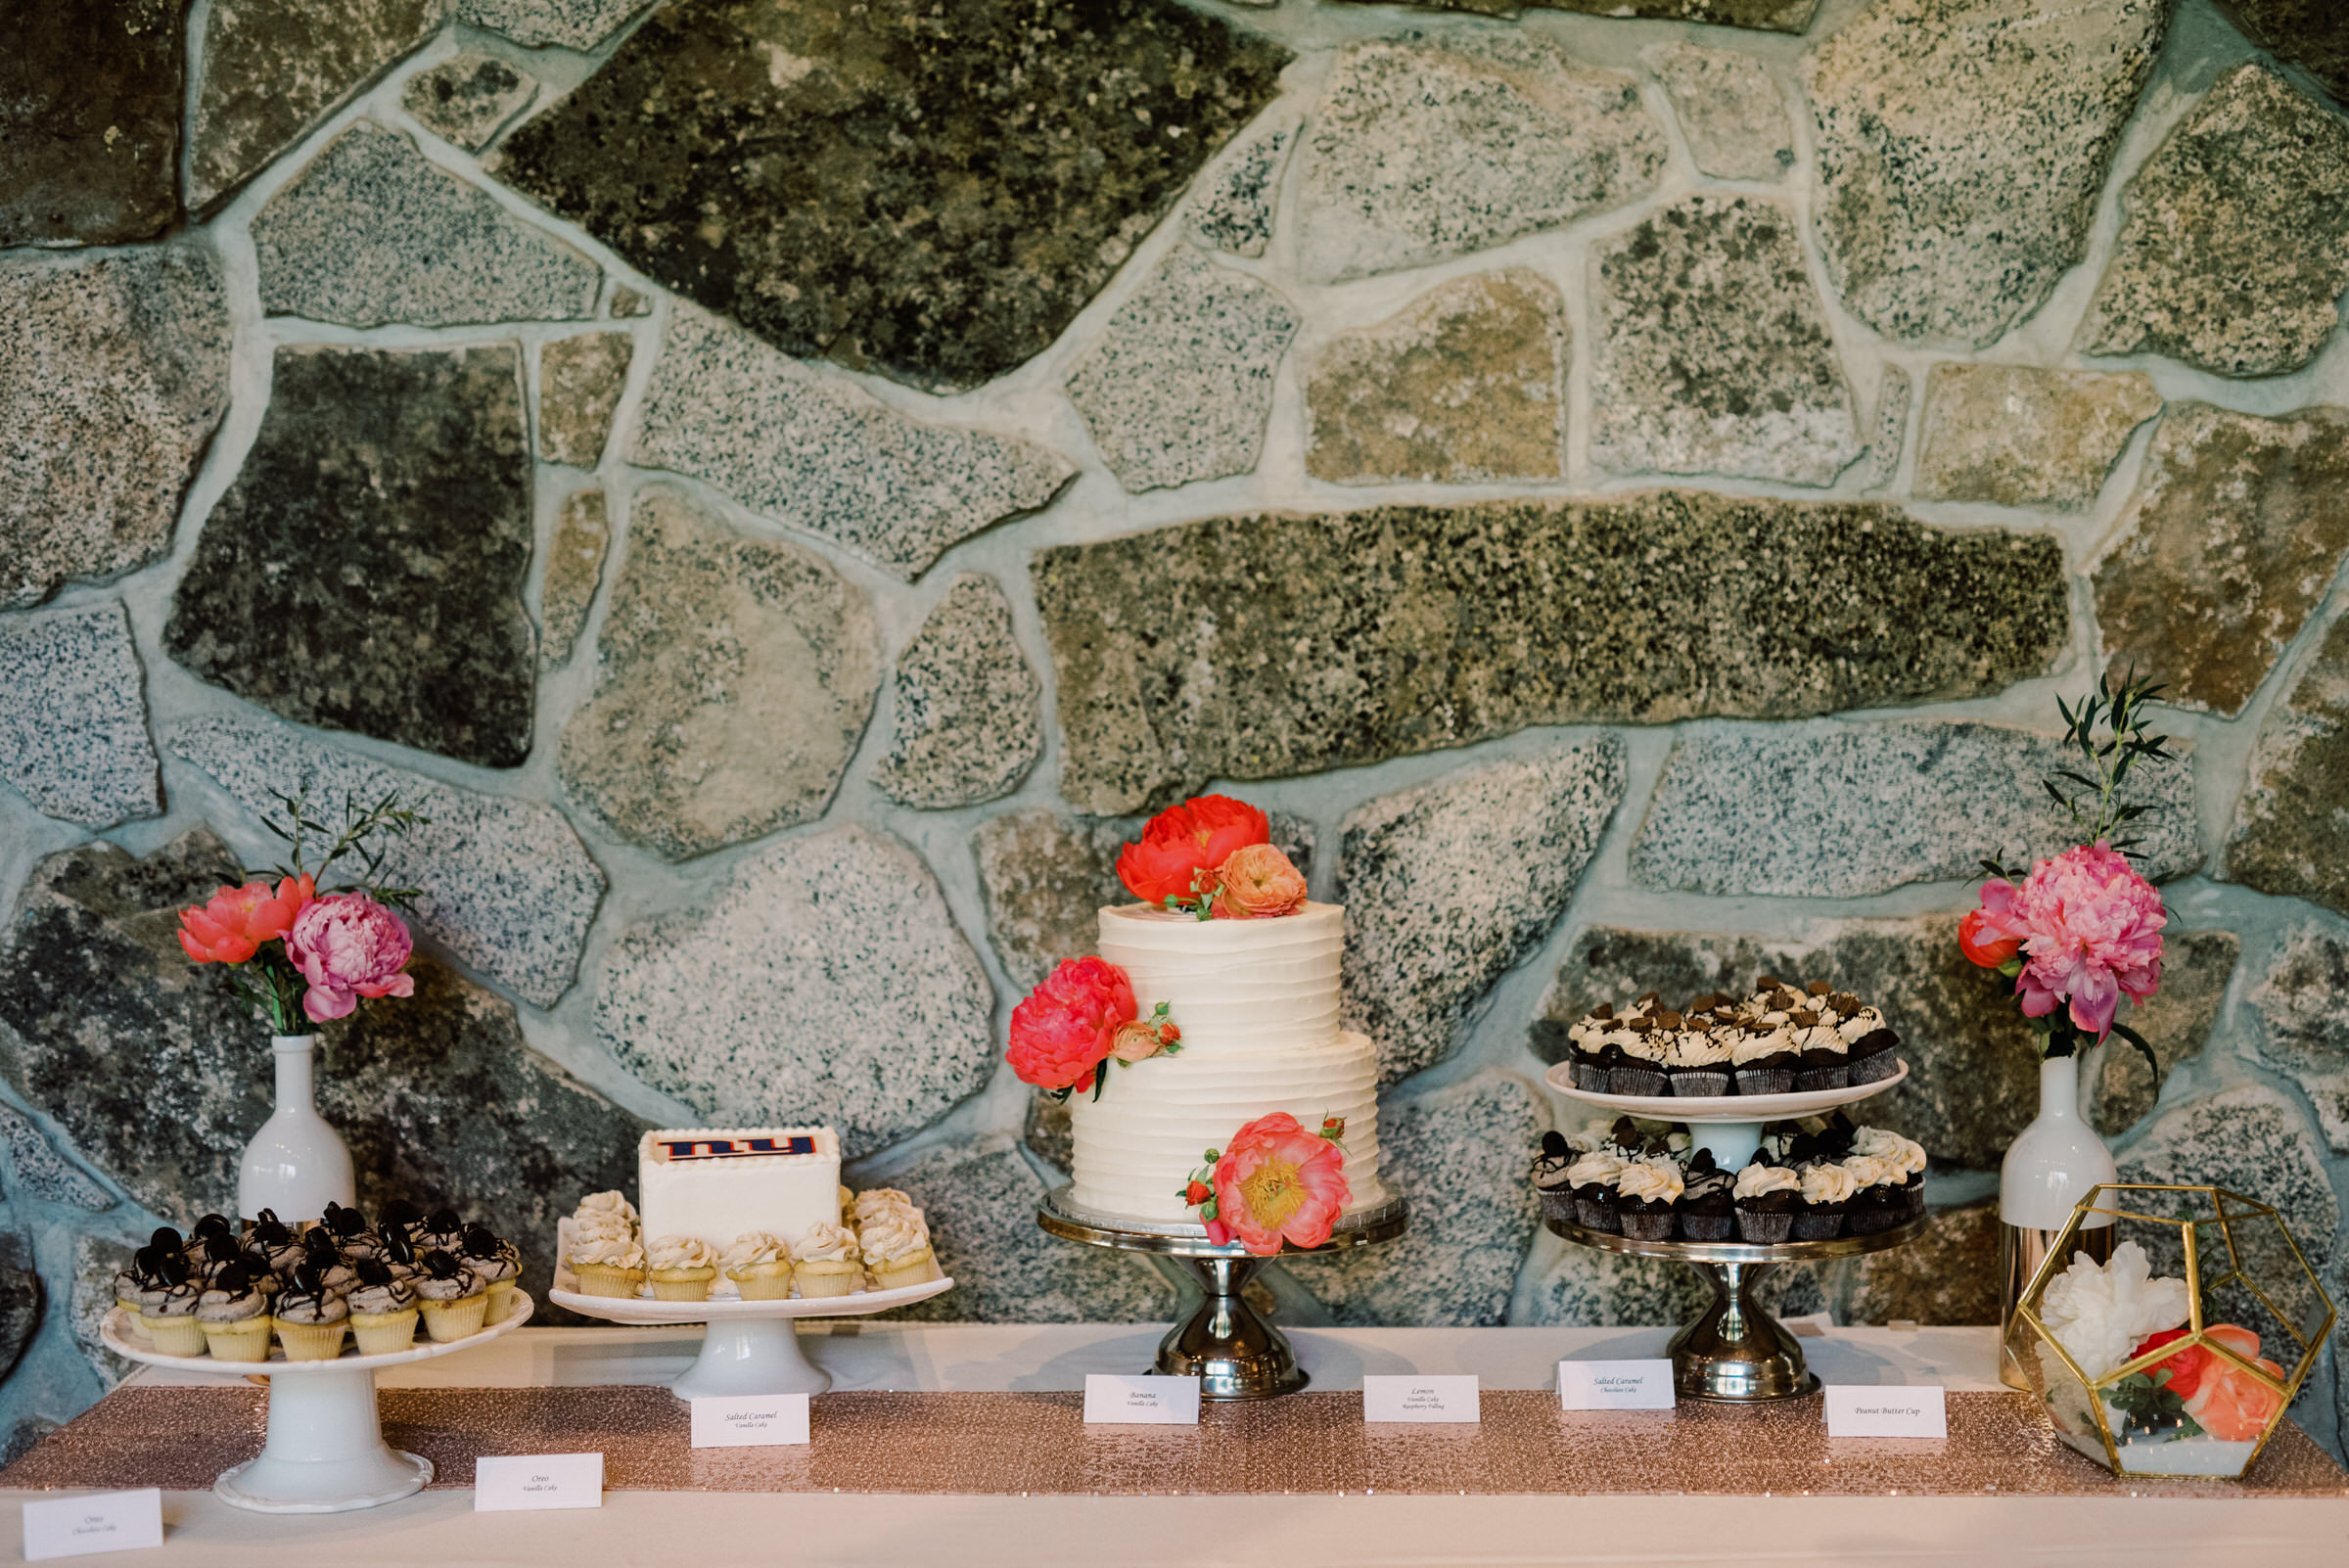 Sleeping Lady Resort weddings: The wedding dessert table